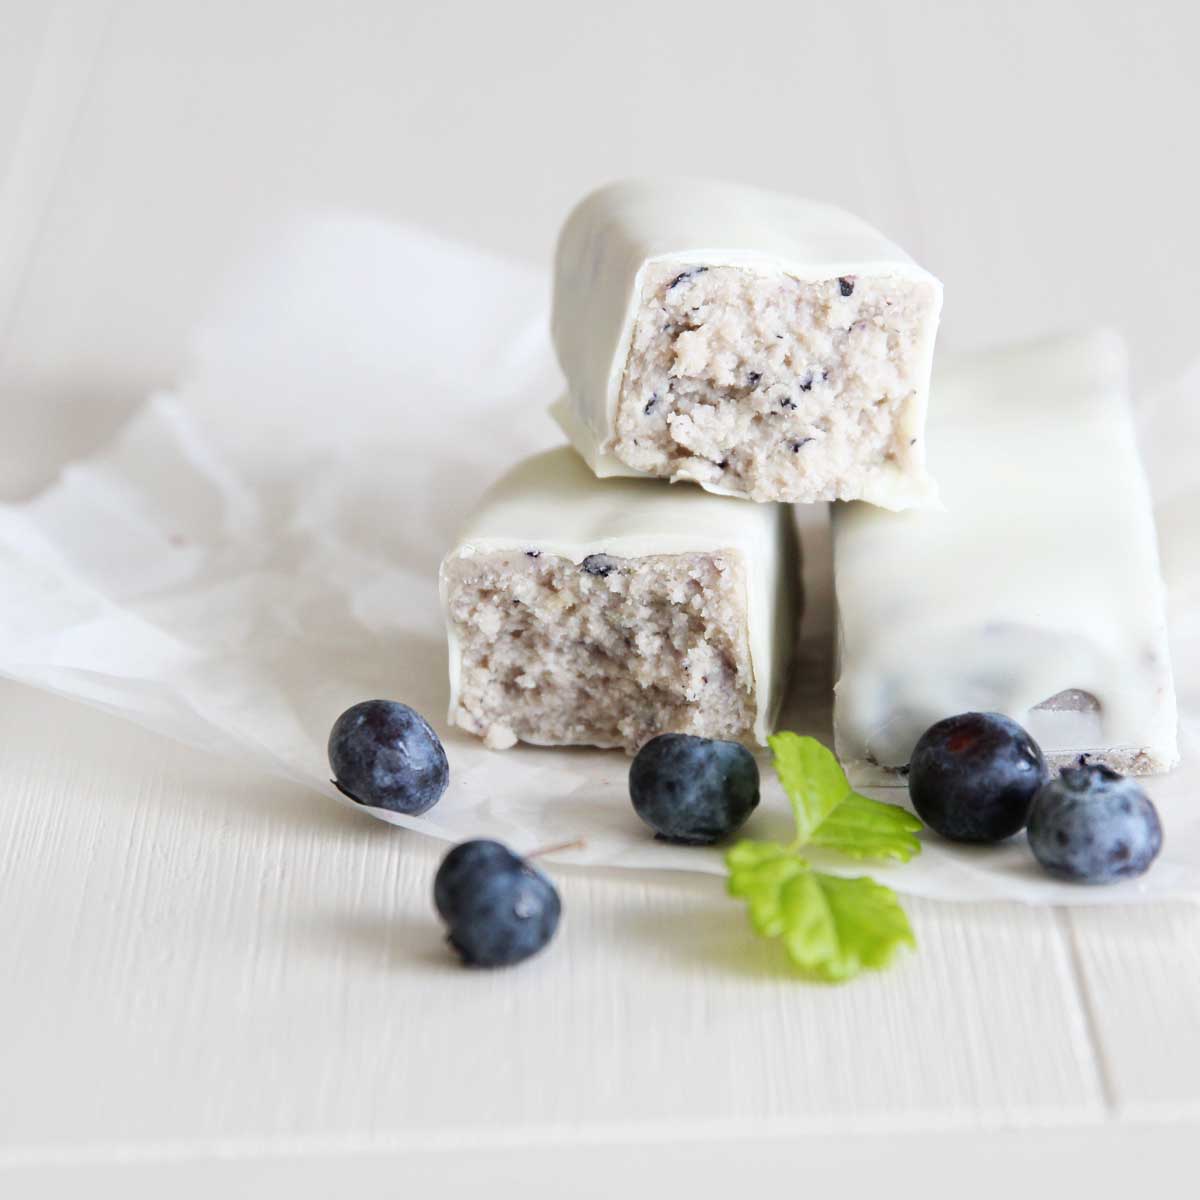 Healthy Blueberry Greek Yogurt Protein Bars (Easy, No Bake Recipe) - Almond Joy Protein Bars